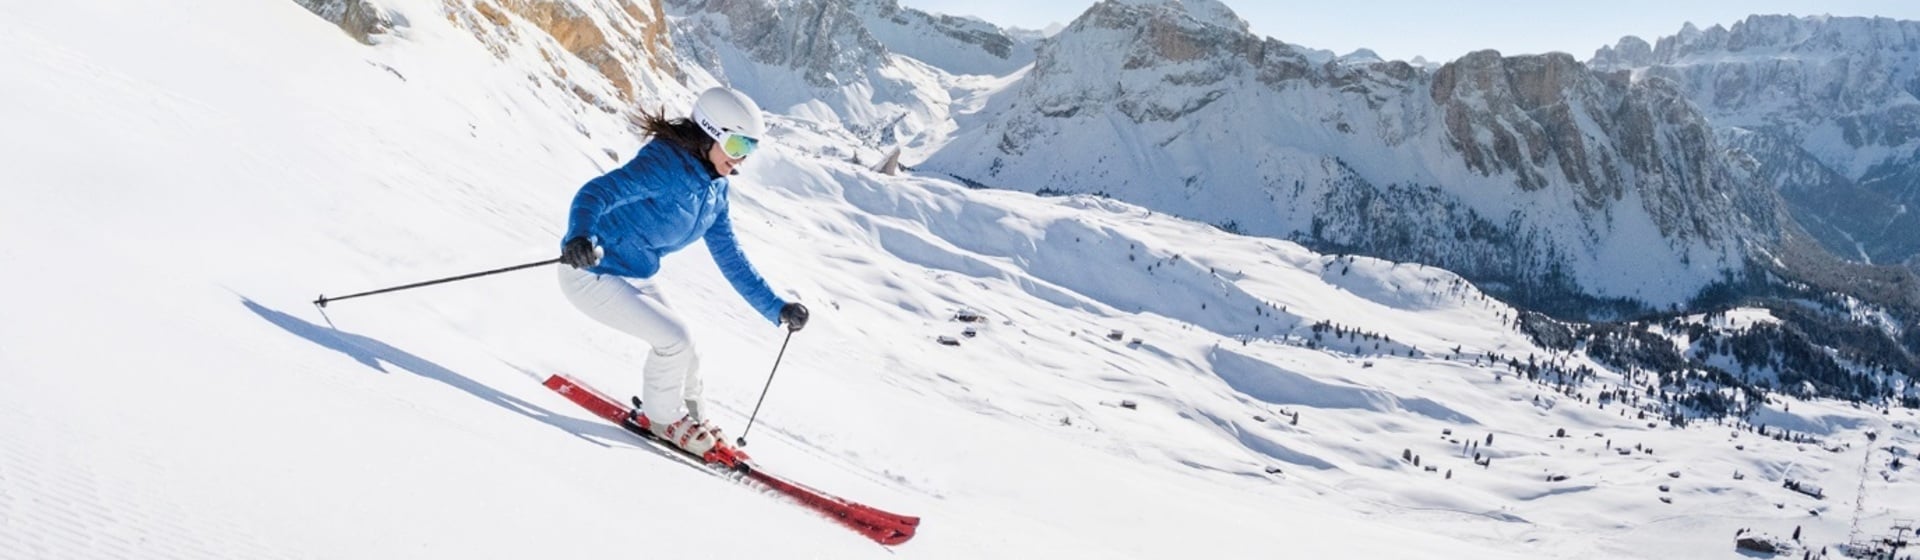 DOLOMITI SUPERSKI: to ensure skiing enthusiasts enjoy in maximum safety and peace of mind